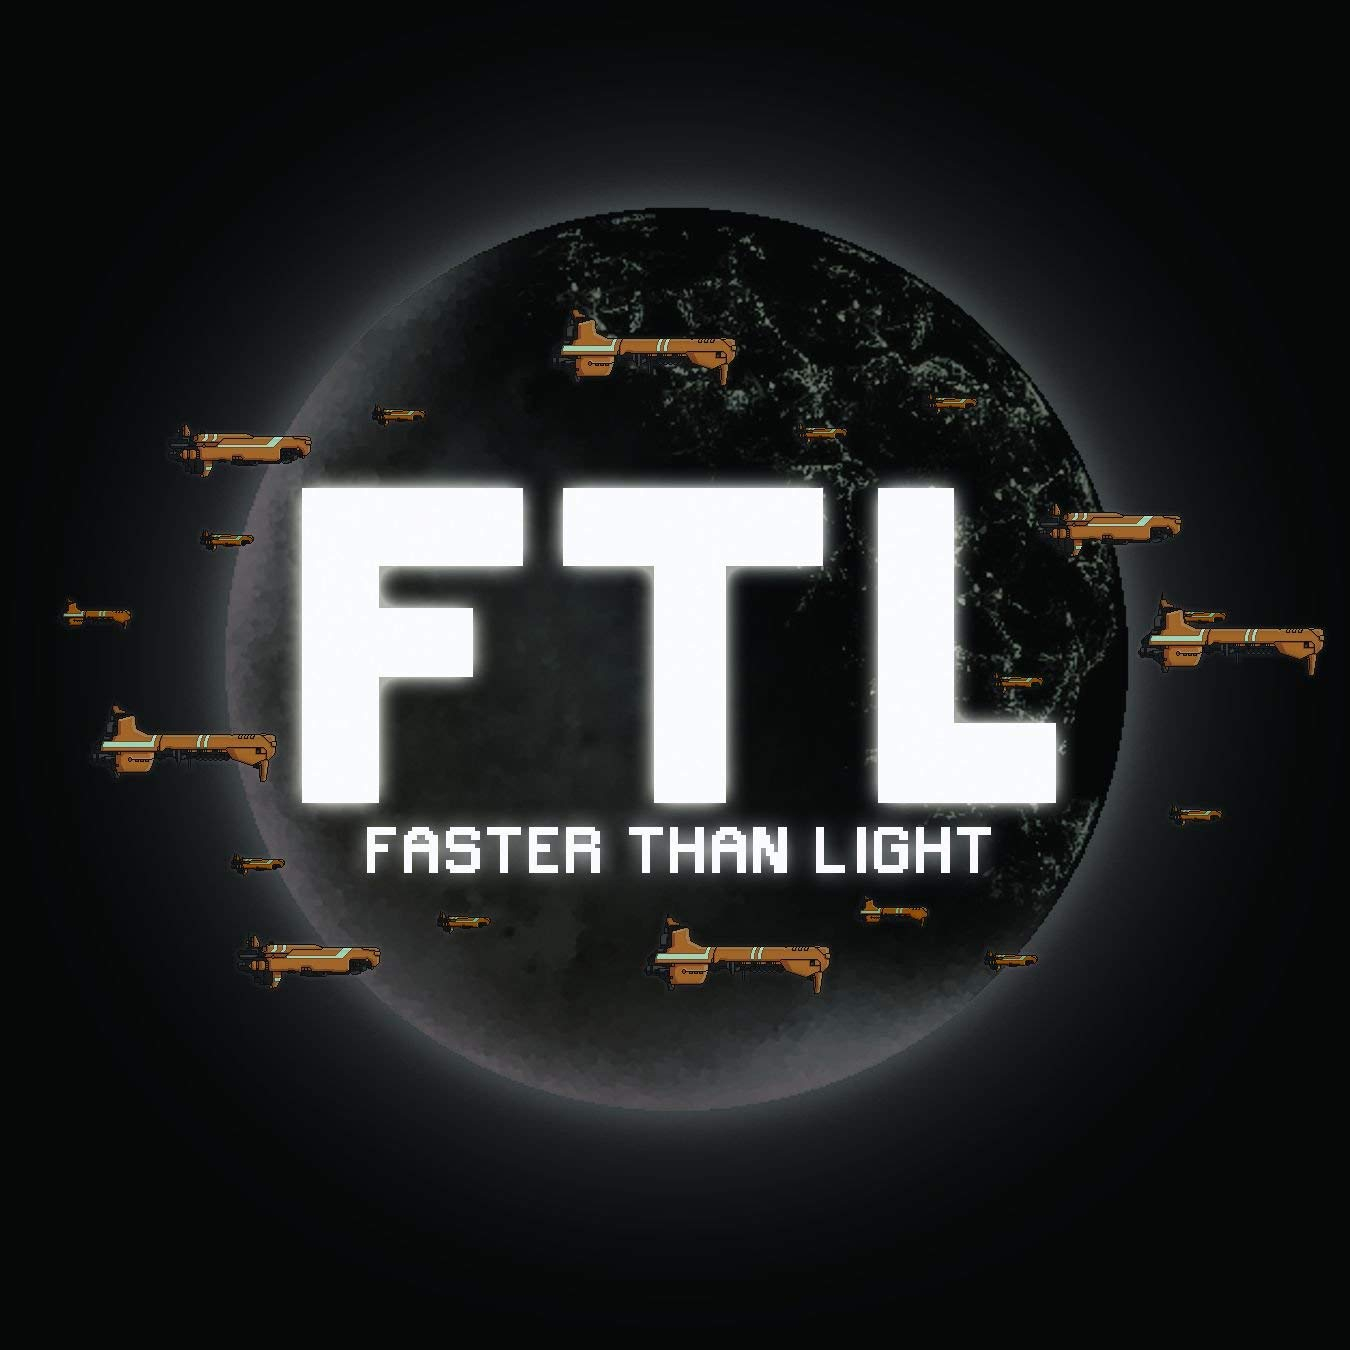 faster than light